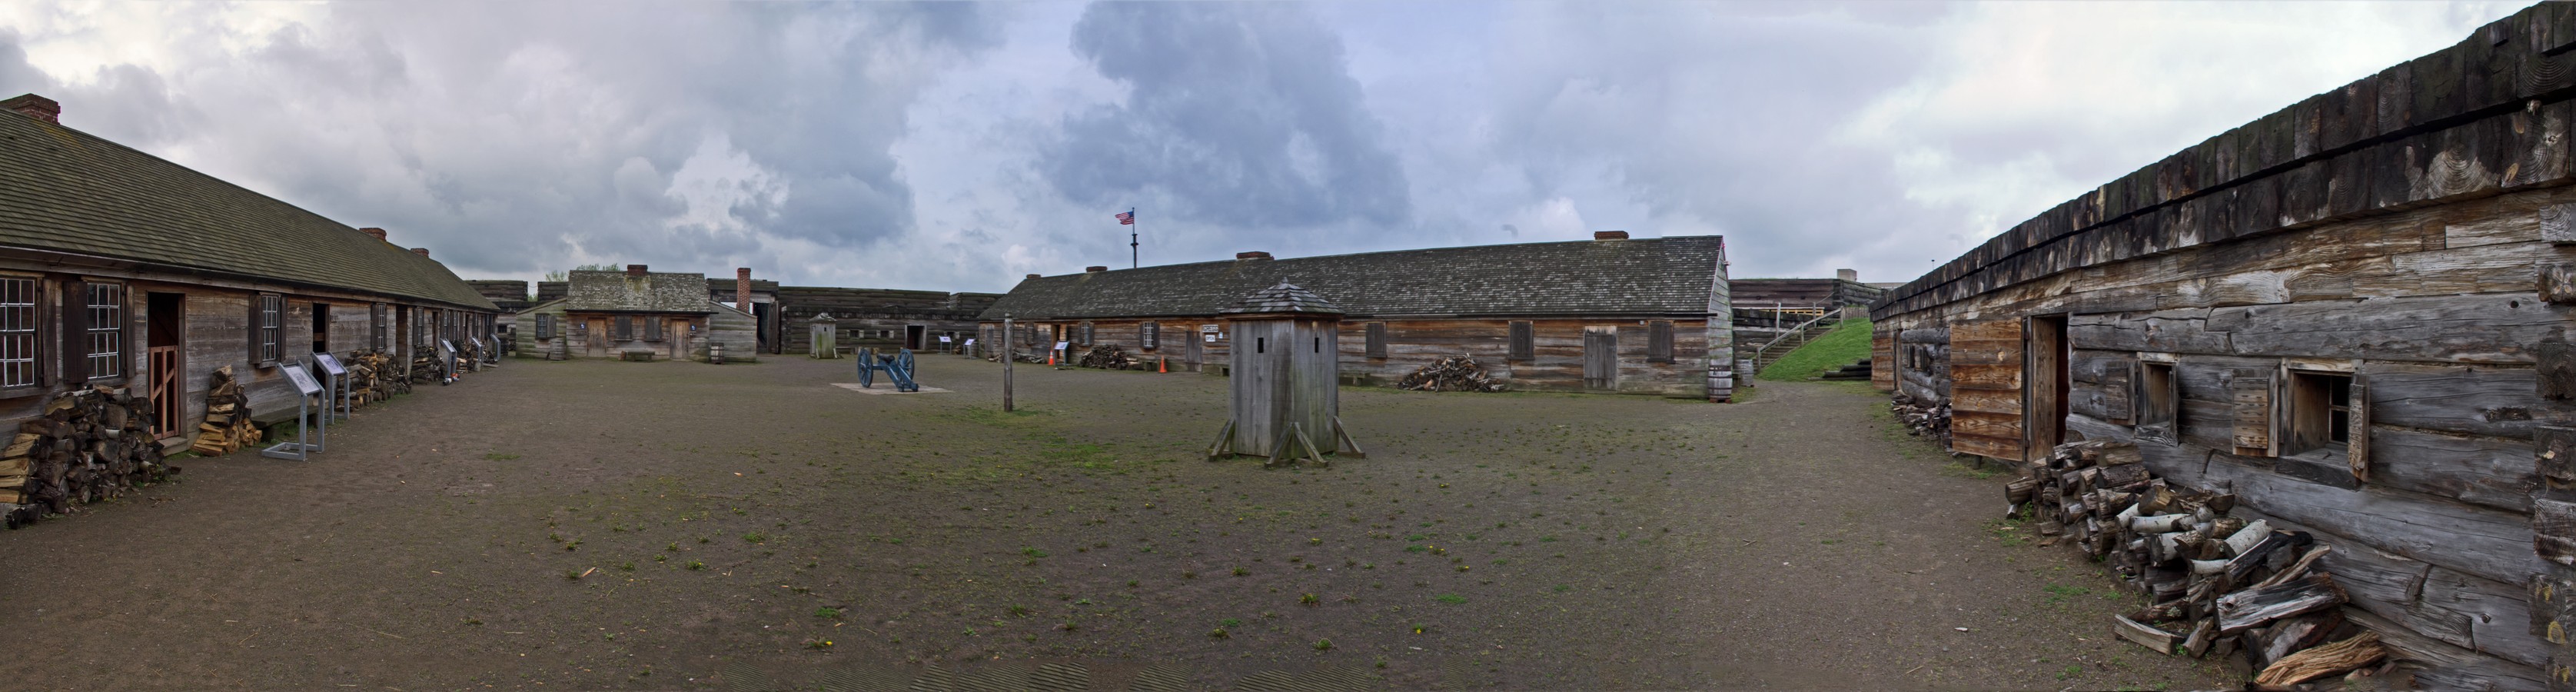 Fort Stanwix National Monumen